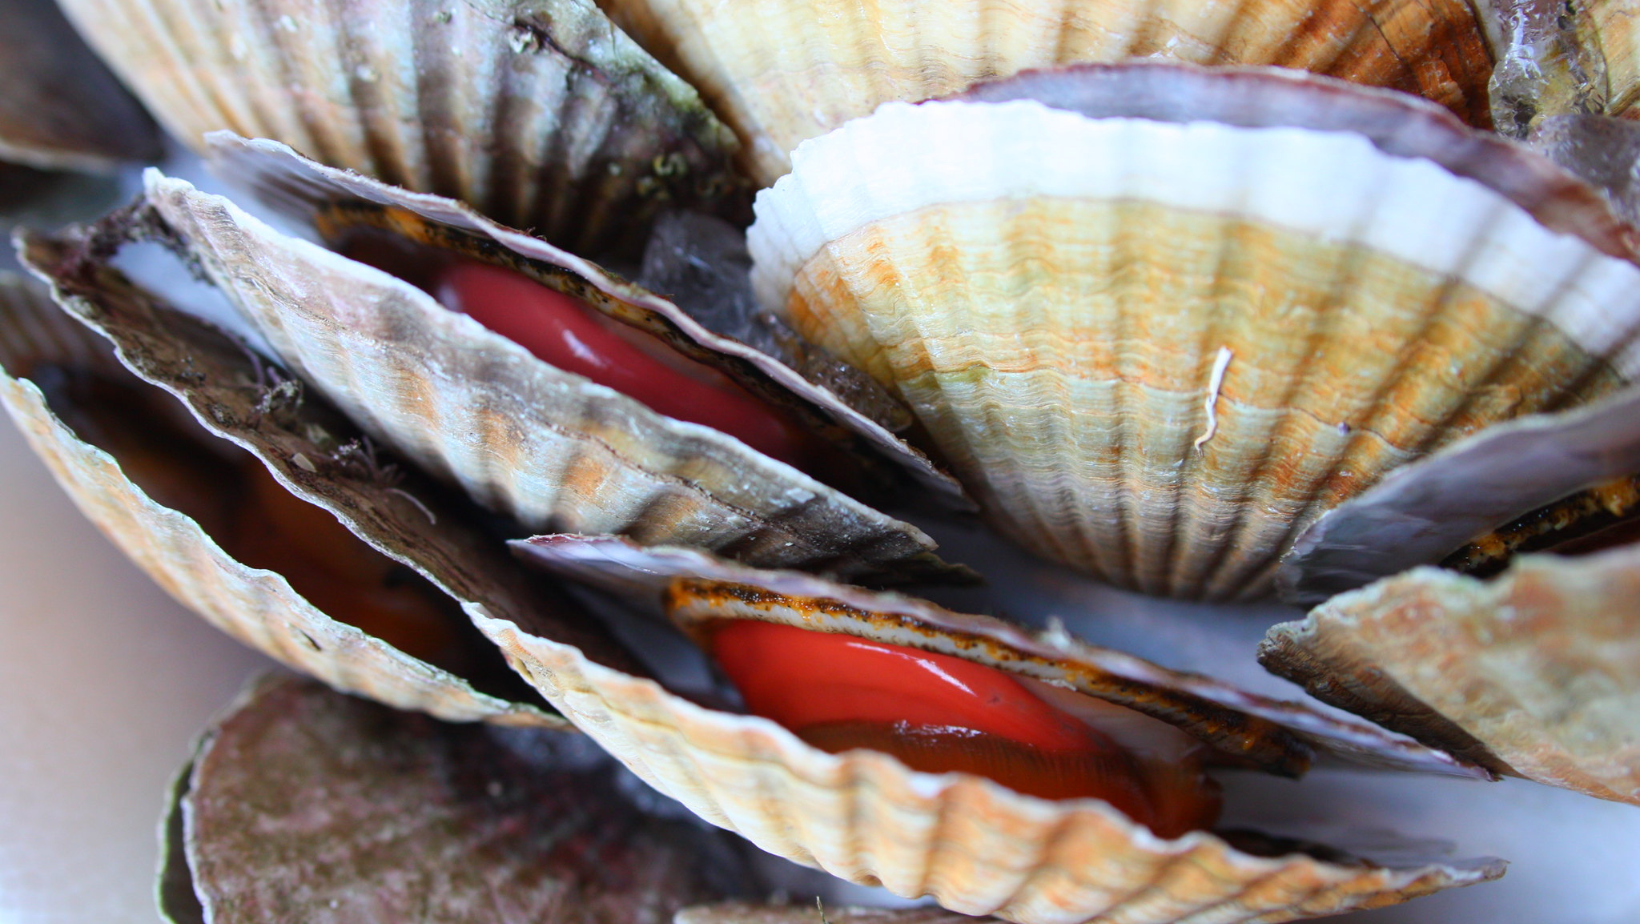 The Scallop Shell on X: Super fresh diver-caught scallops in today! 😍 # scallops #thescallopshell #shellfishsaturday  / X